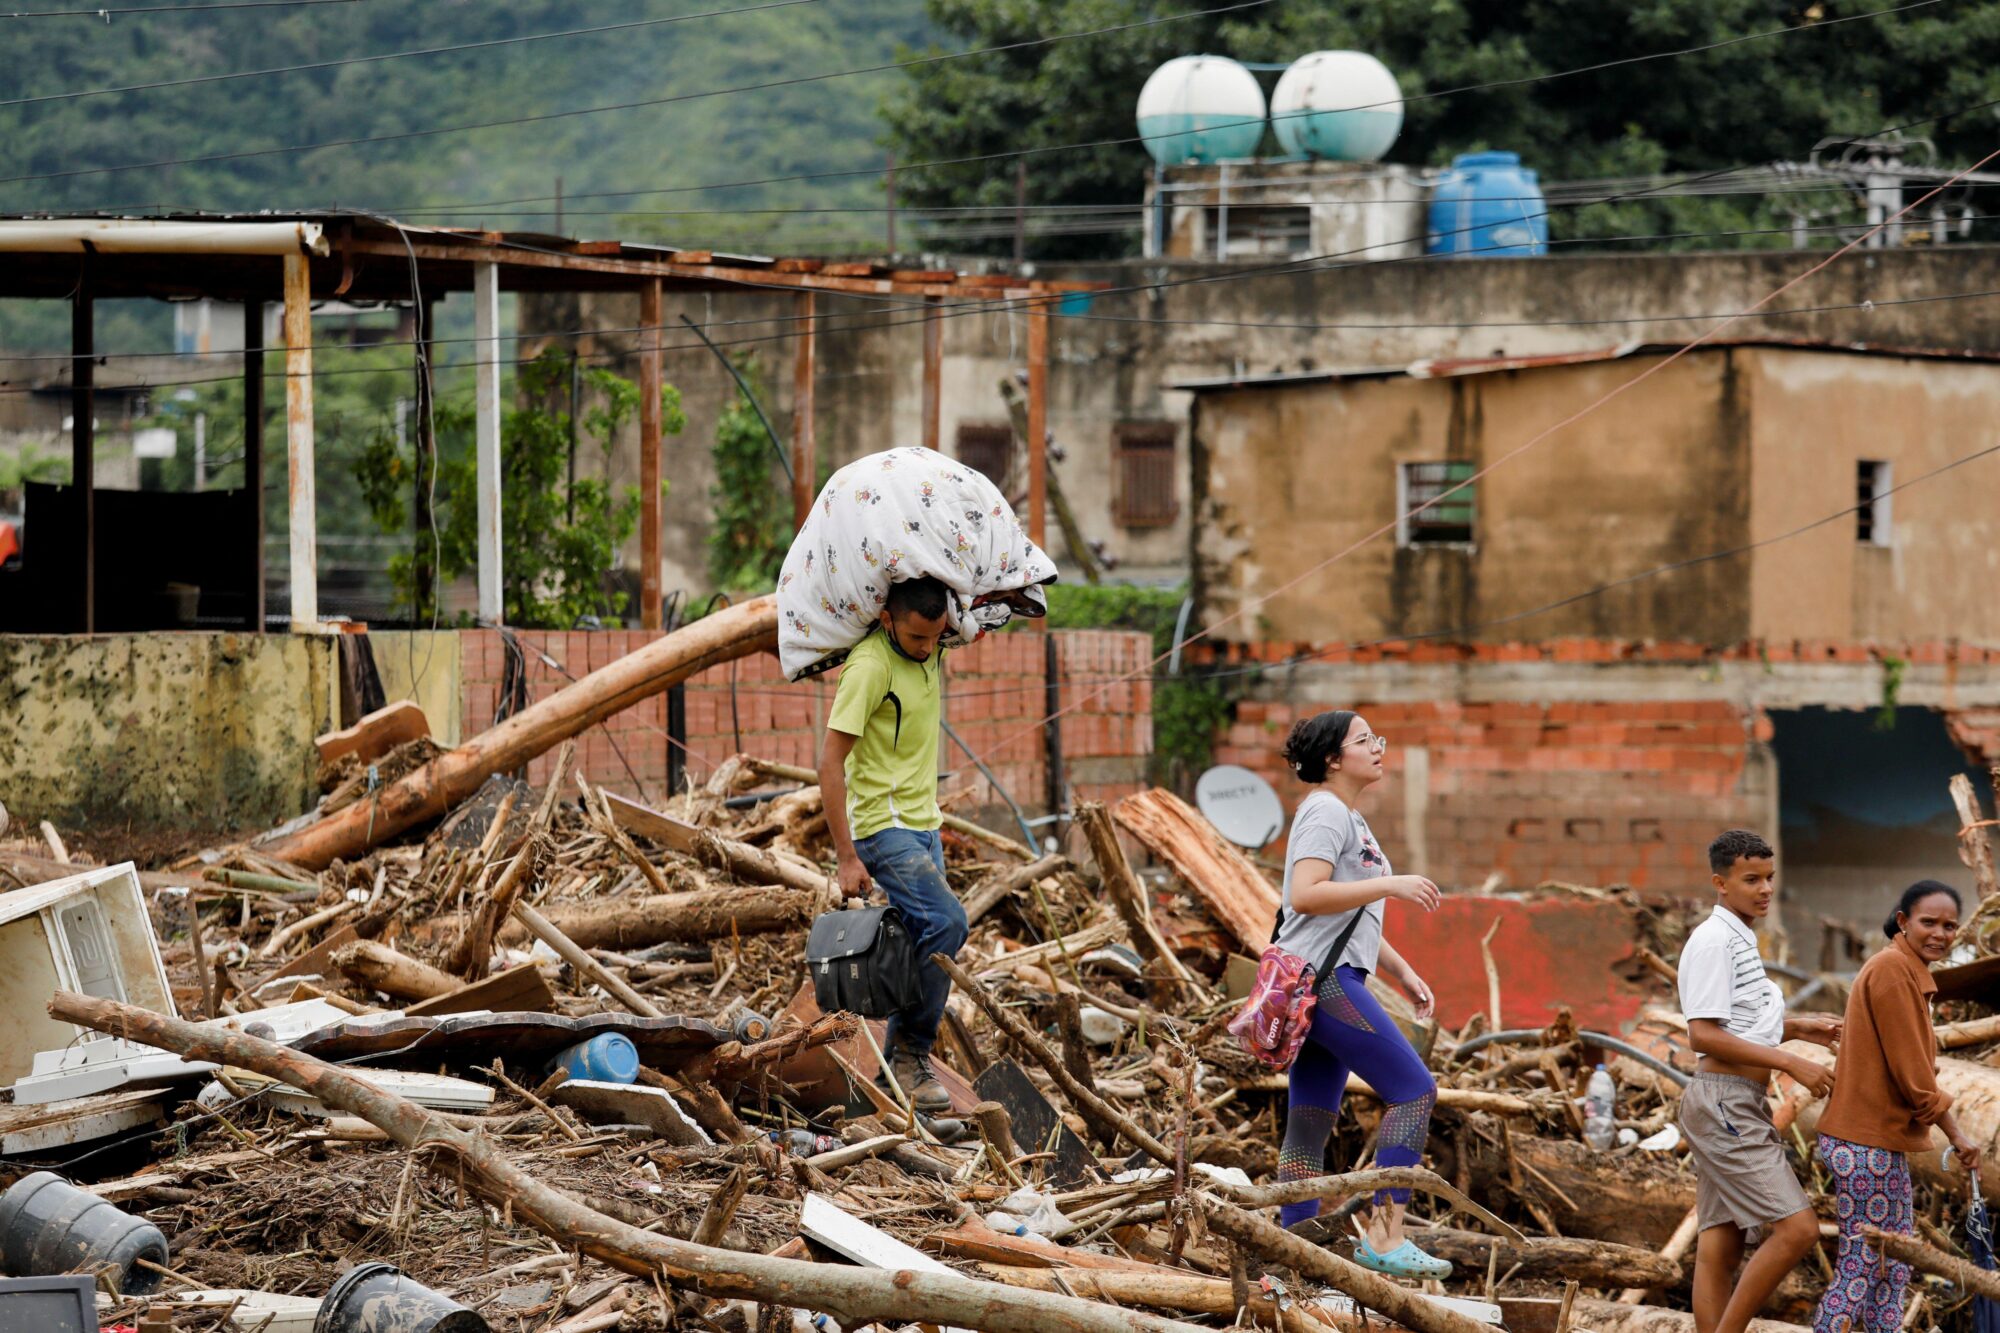 People carry belongings through damage after floods in Venezuela in October 2022